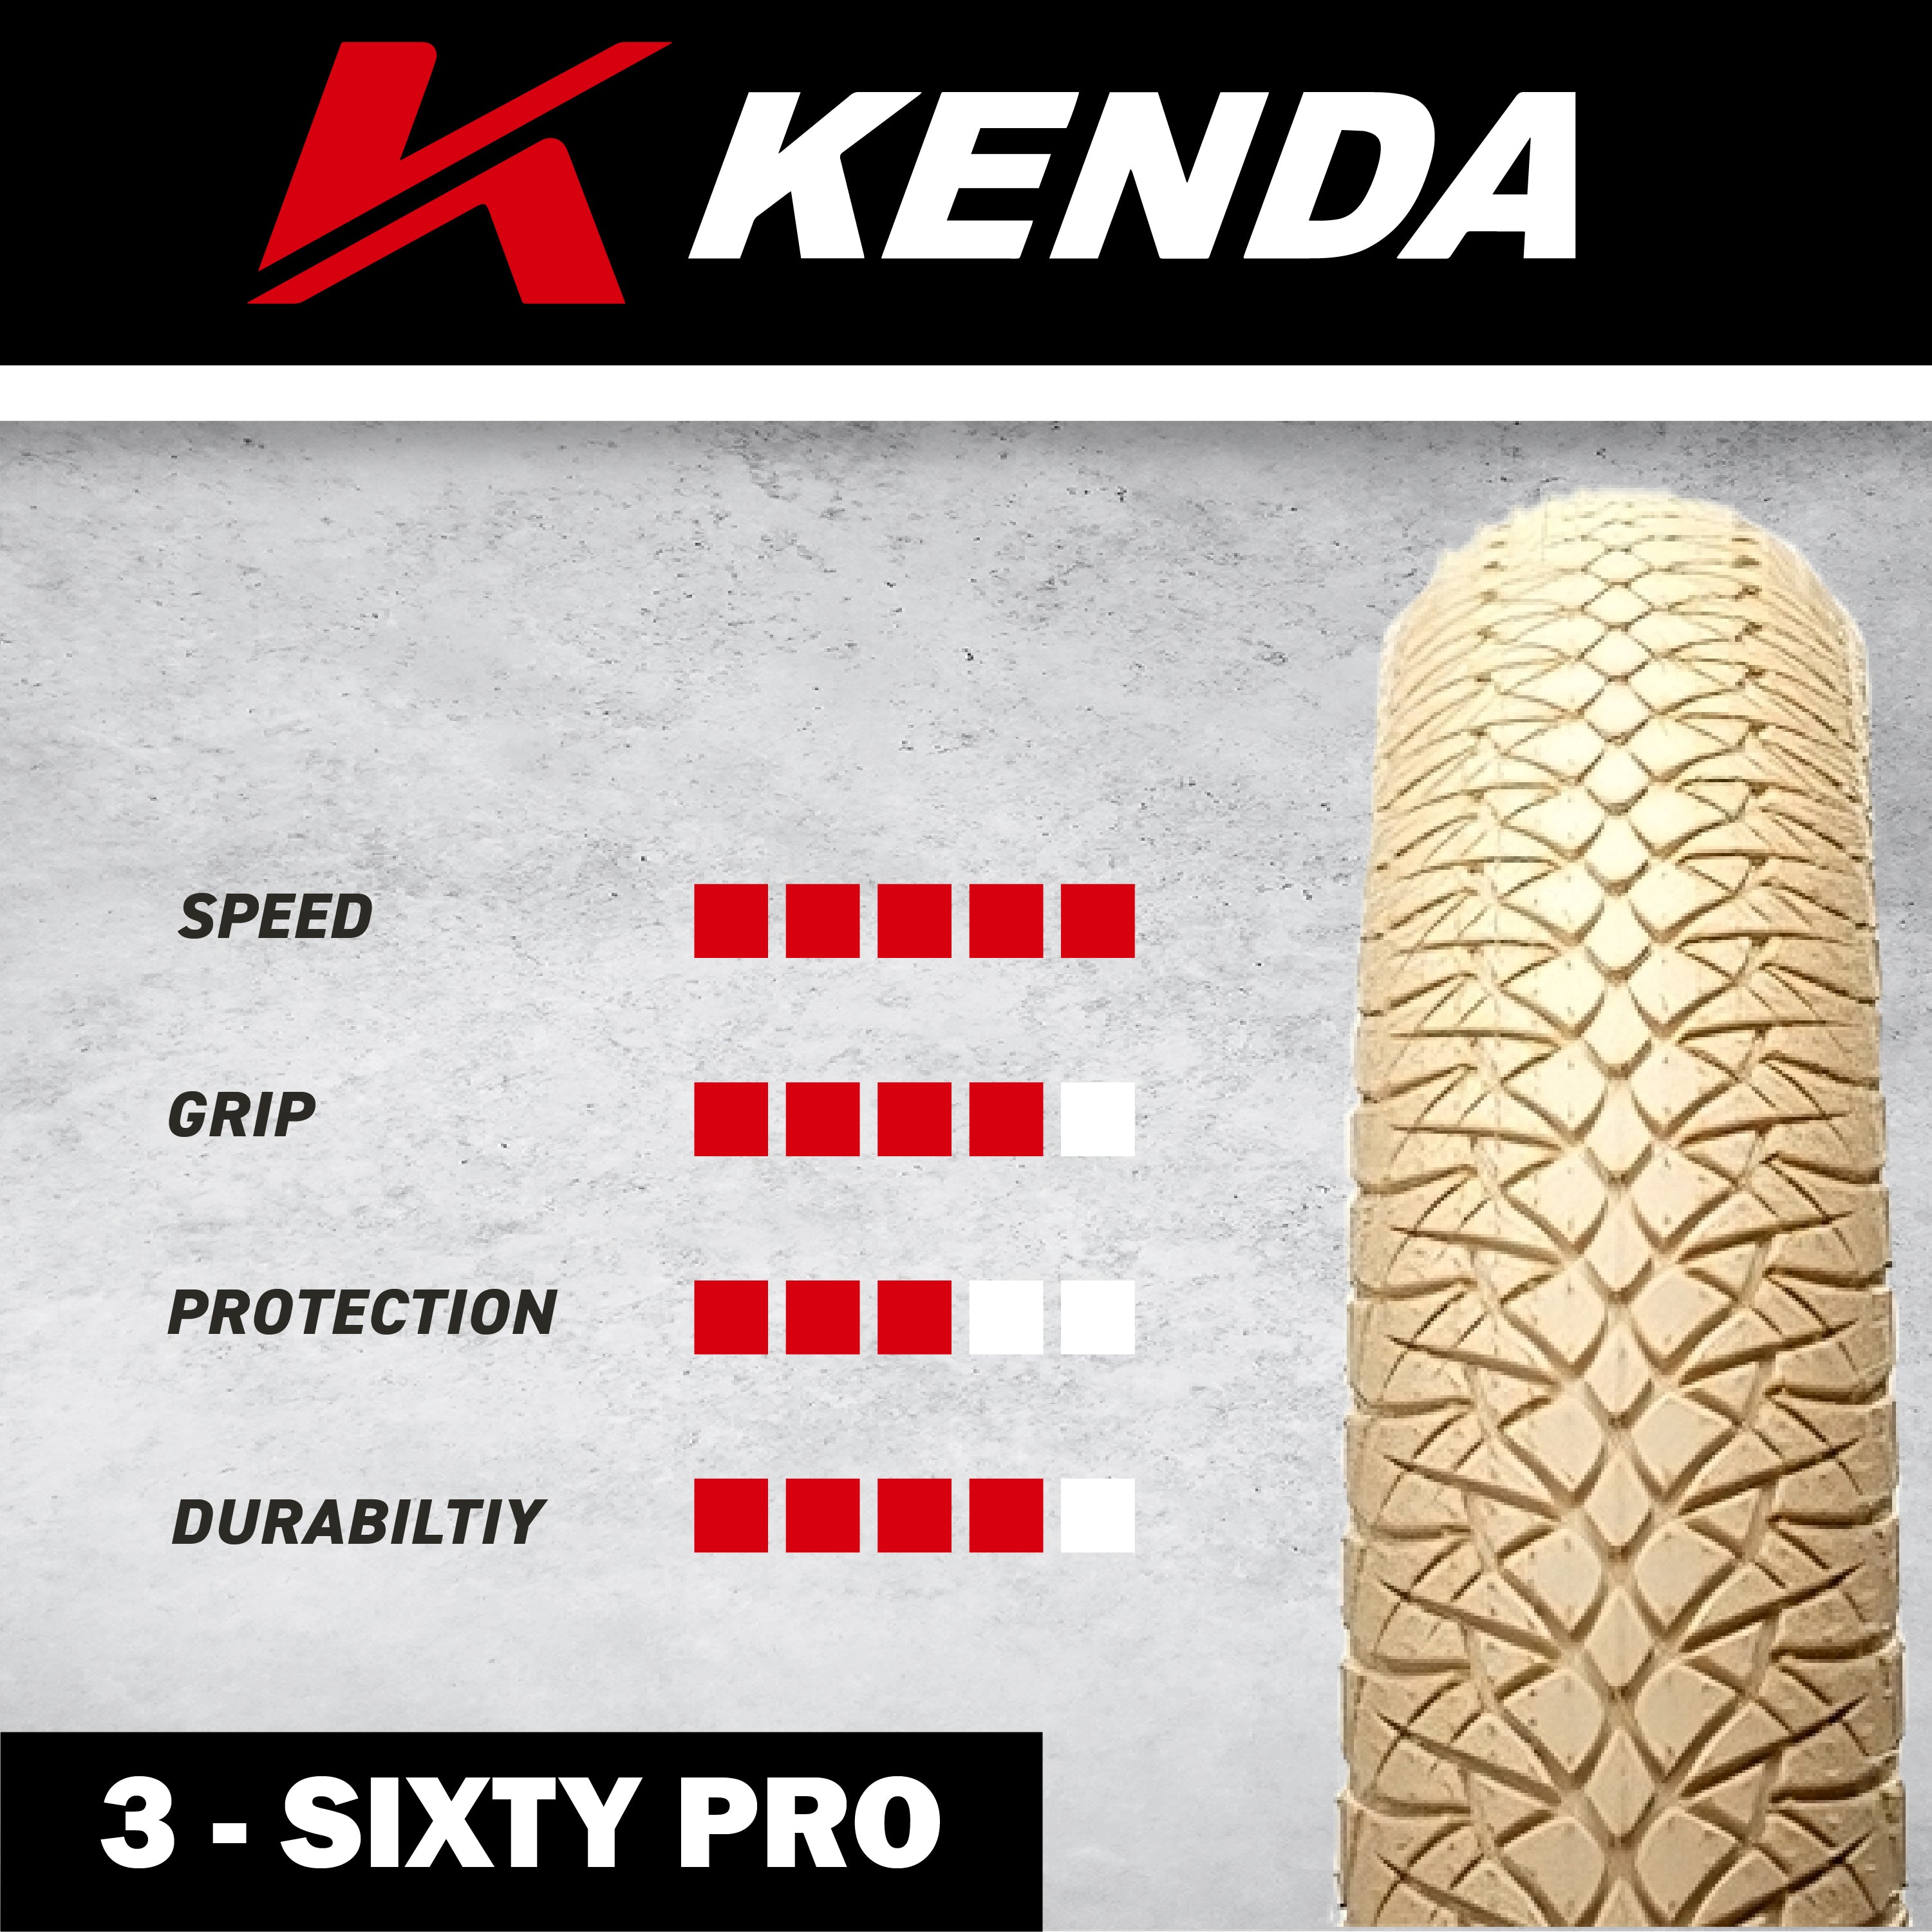 Kenda 3-Sixty Pro TR 120tpi 26x2.5 Tire, 26x2.00-2.40 Tube & Keychain (Two Pack)